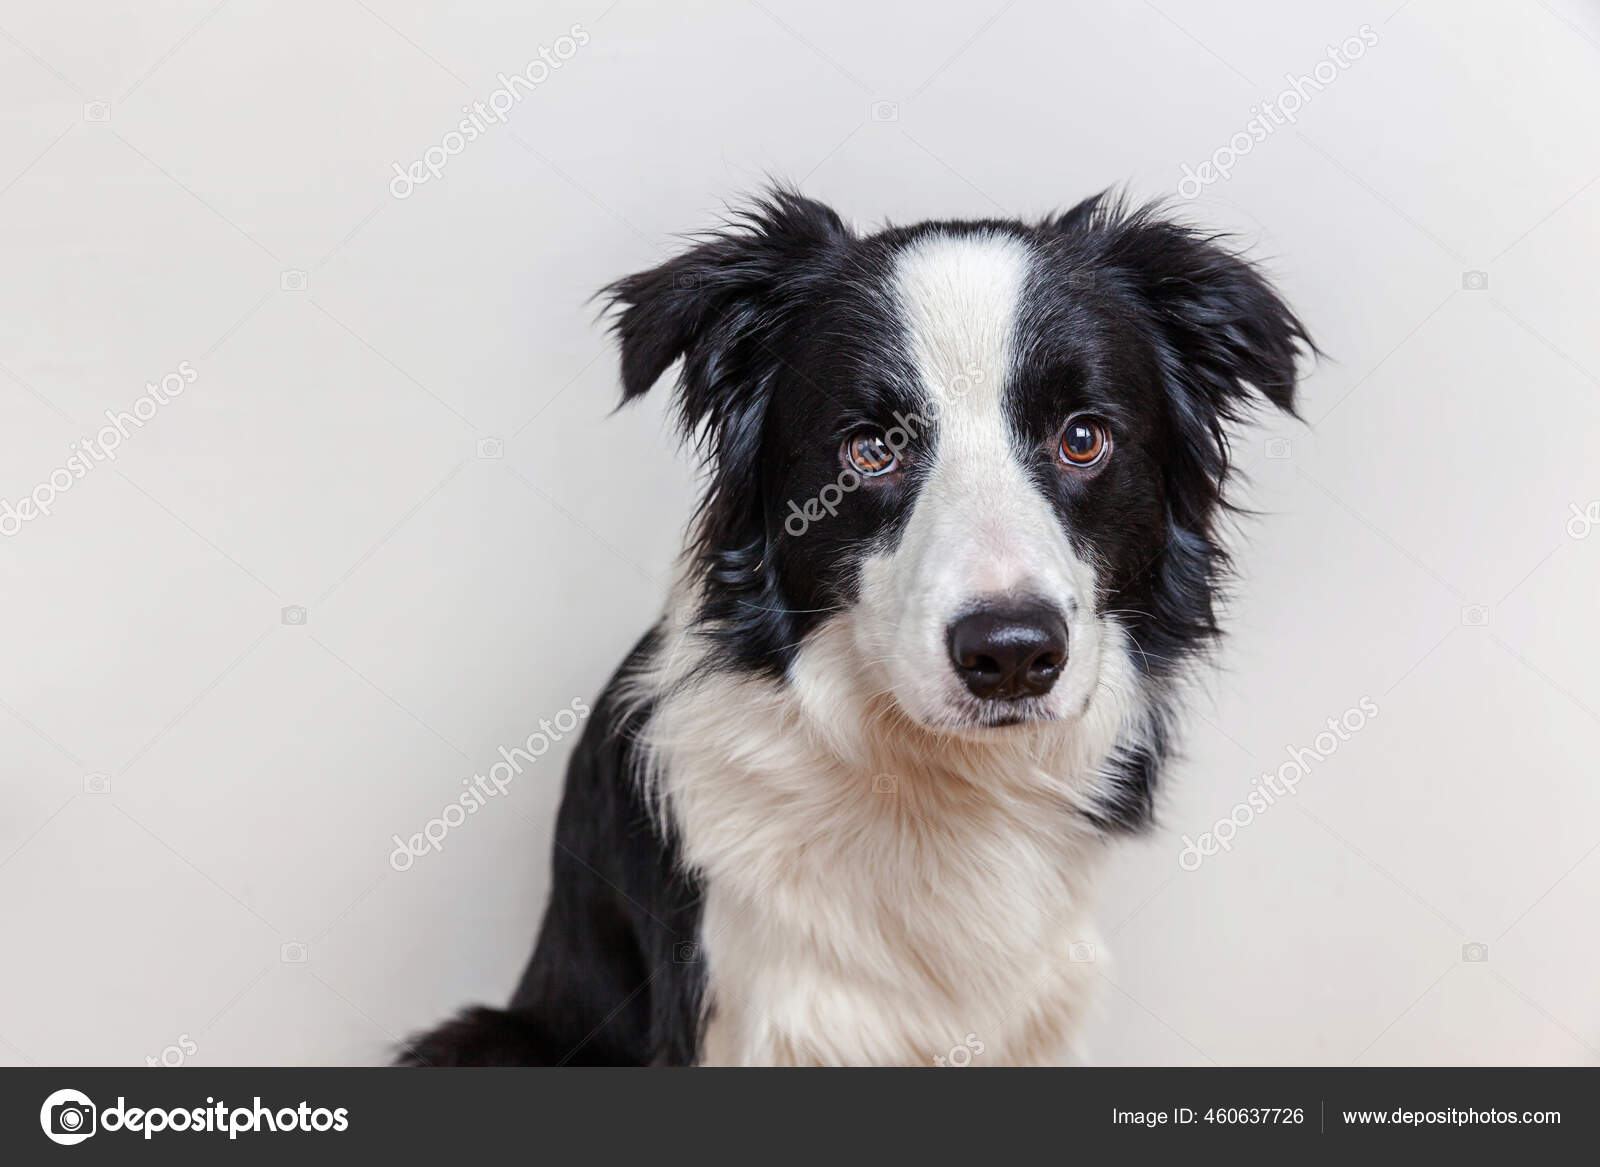 Funny studio portrait of cute smiling puppy dog border collie